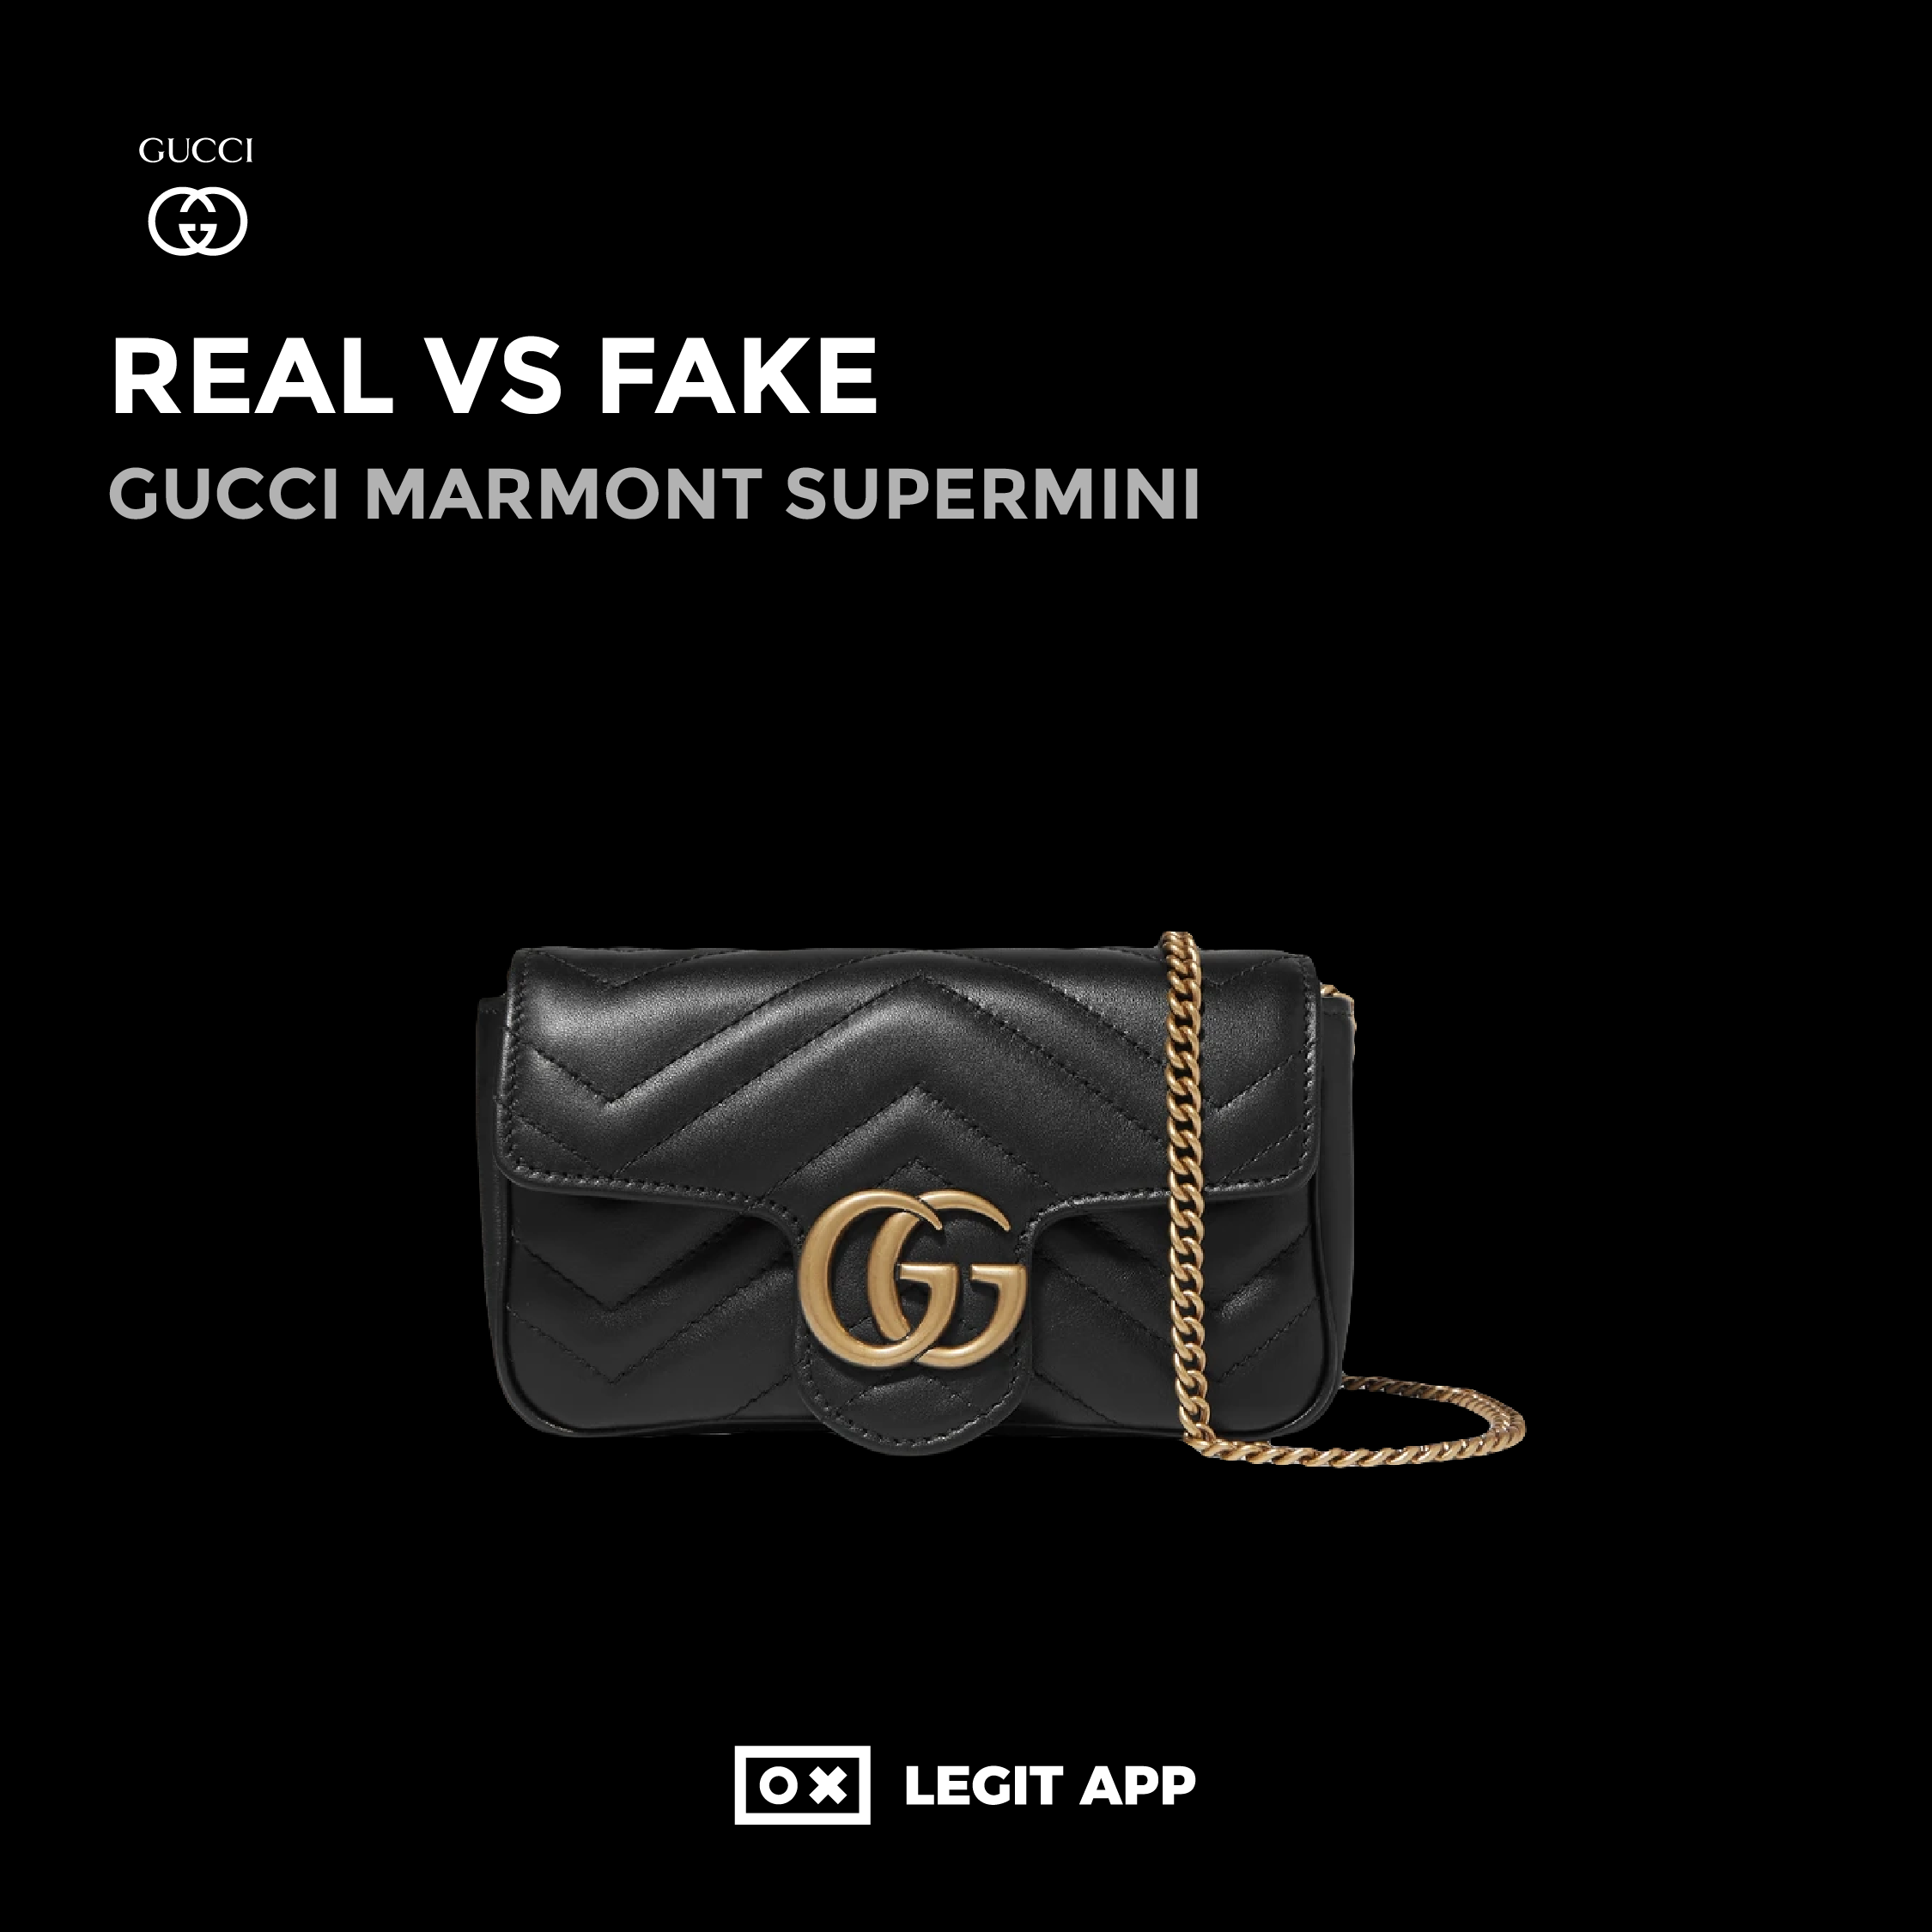 gucci marmont bag fake vs real